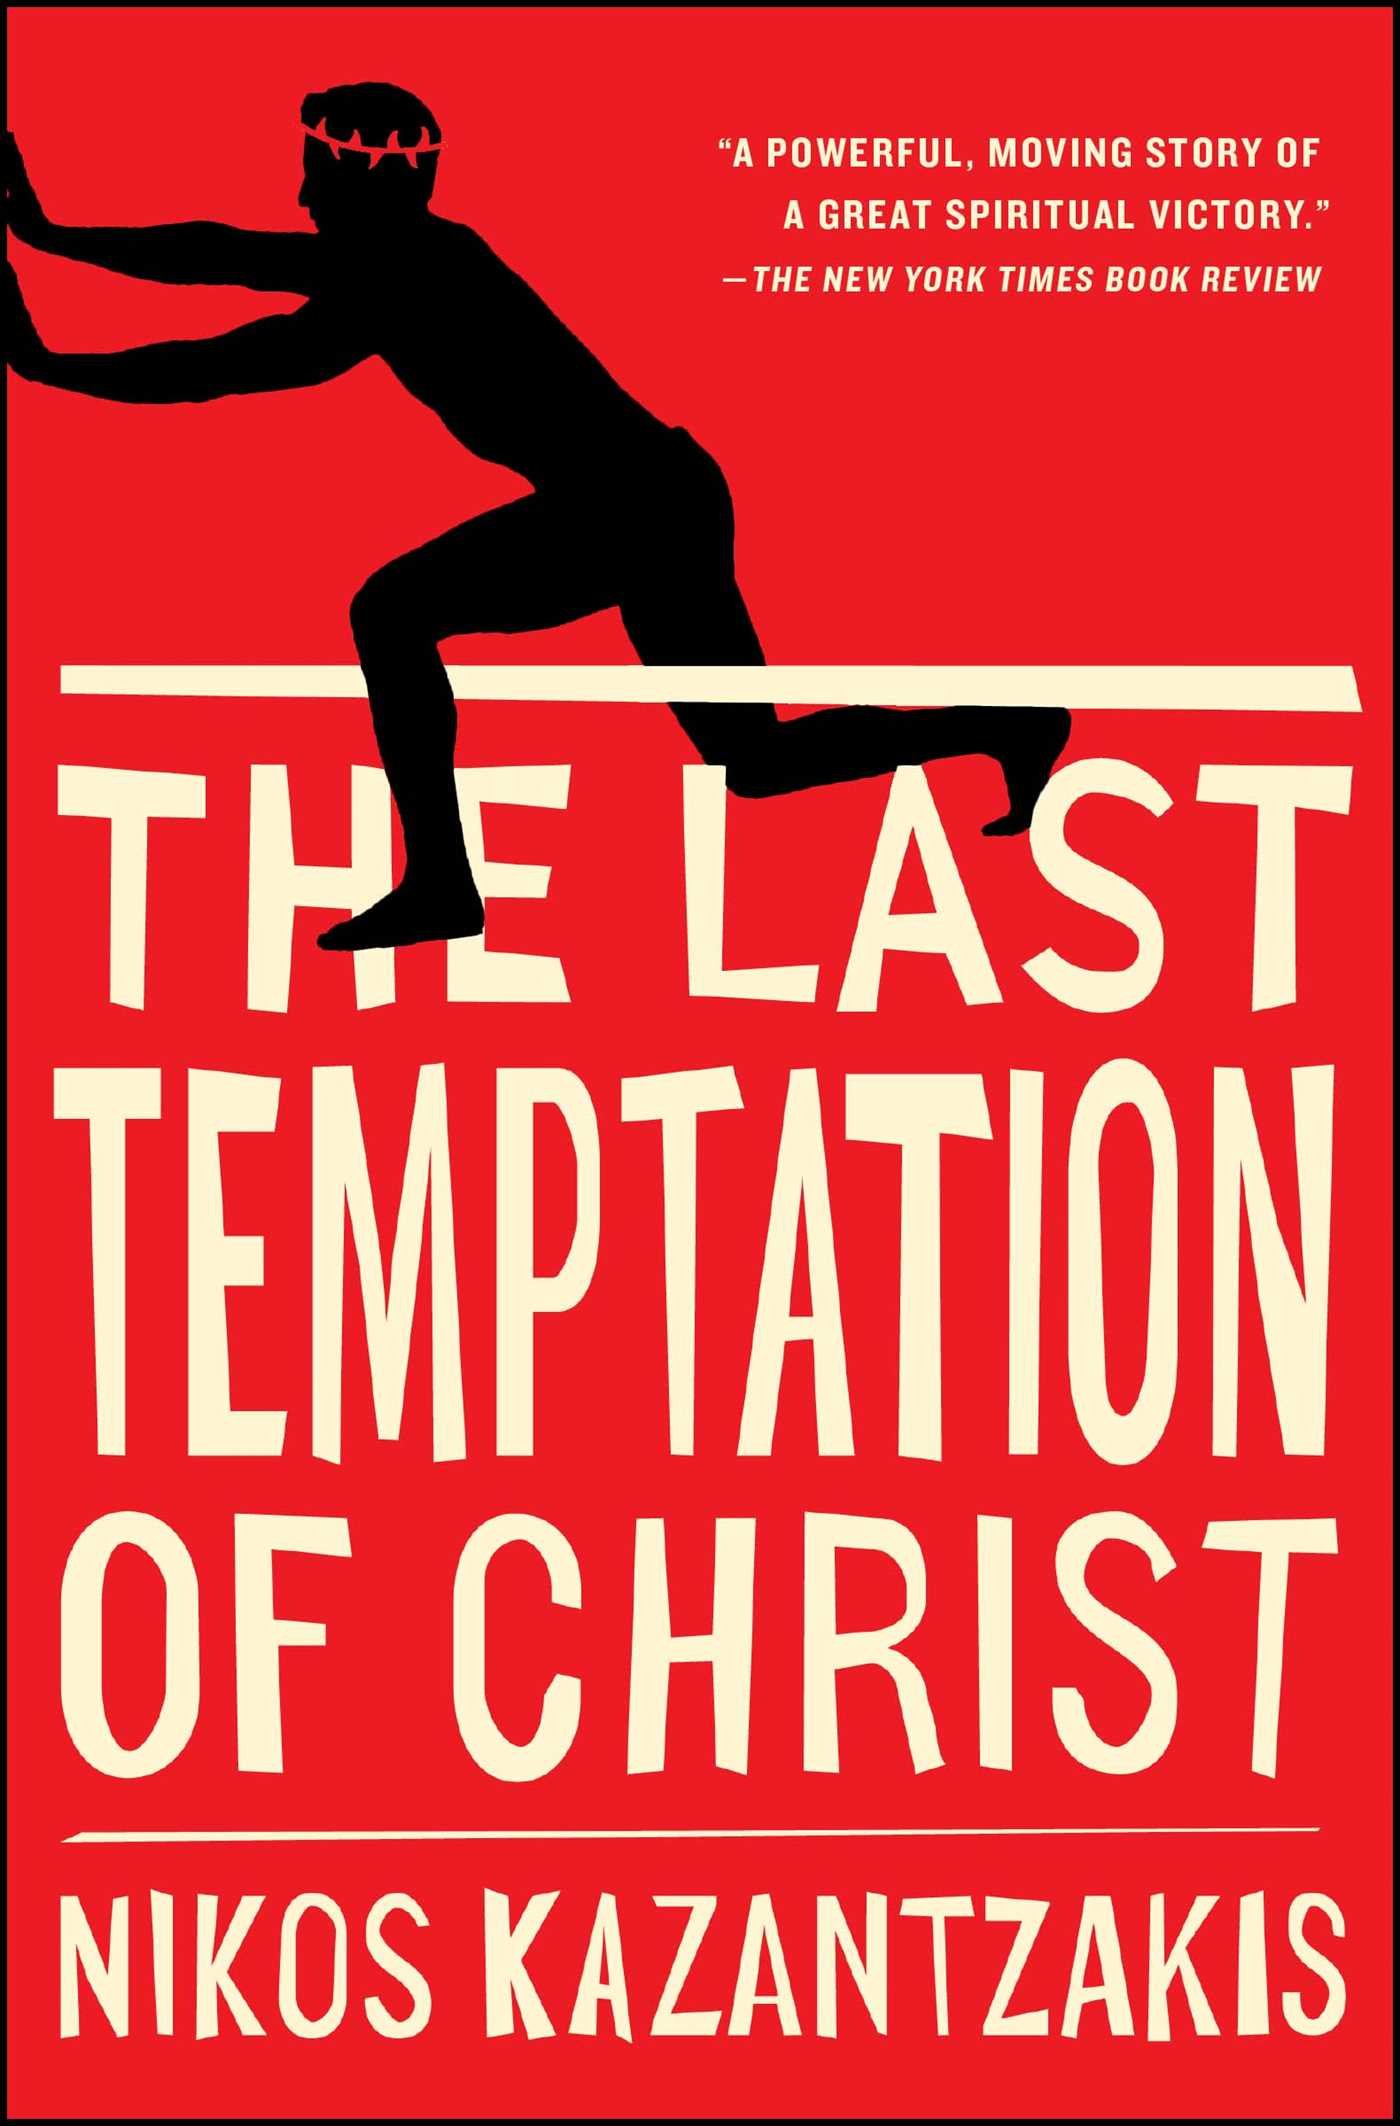 The Last temptation of Christ